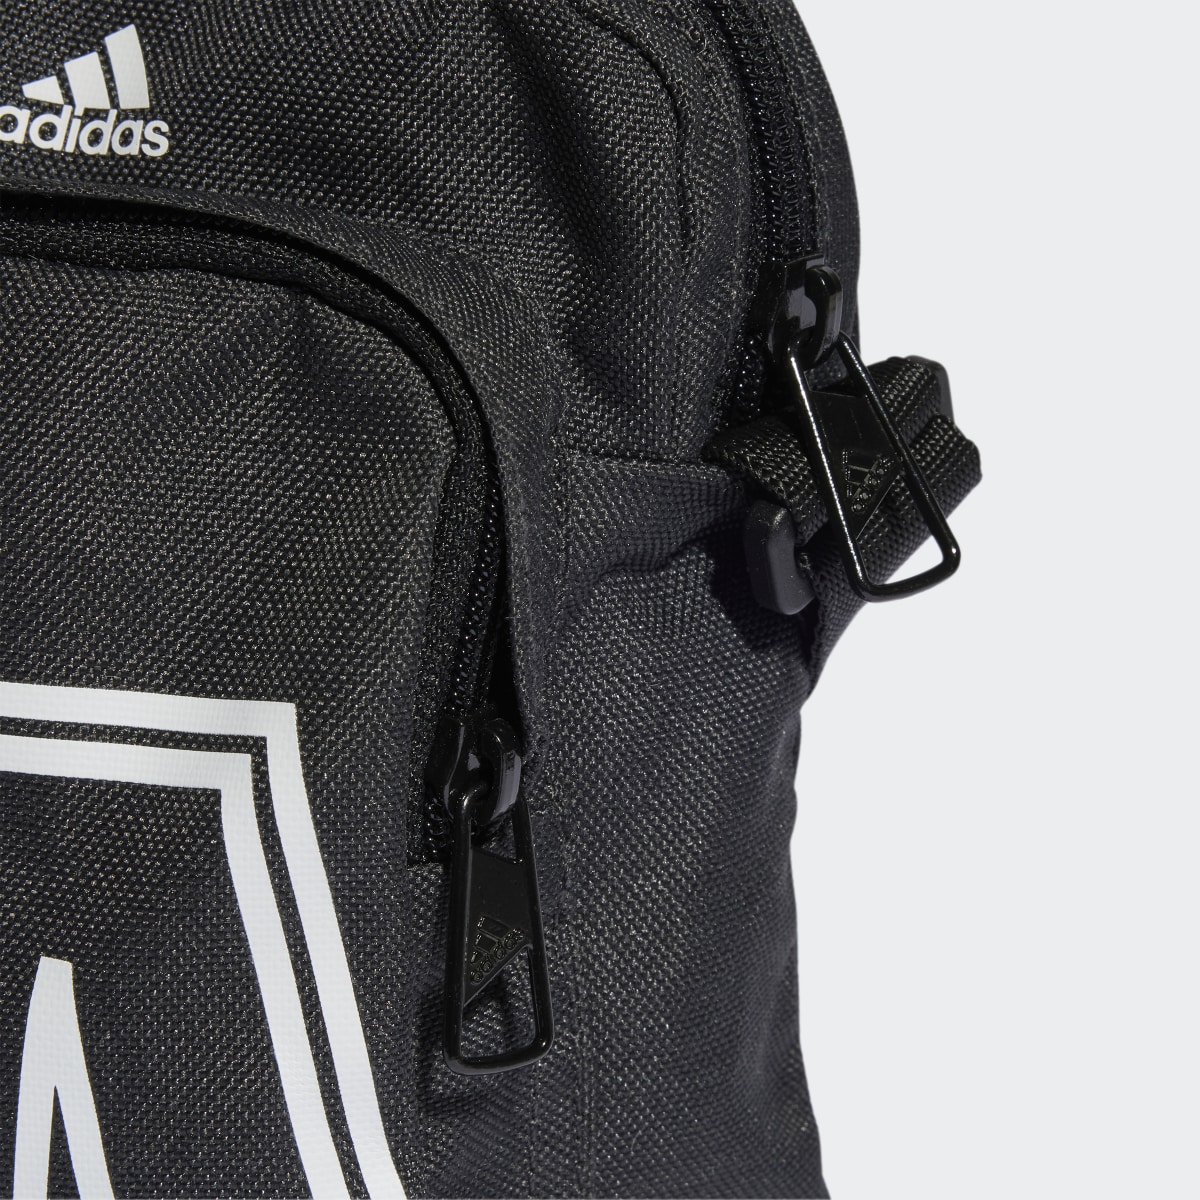 Adidas Classic Brand Love Initial Print Organizer Bag. 6